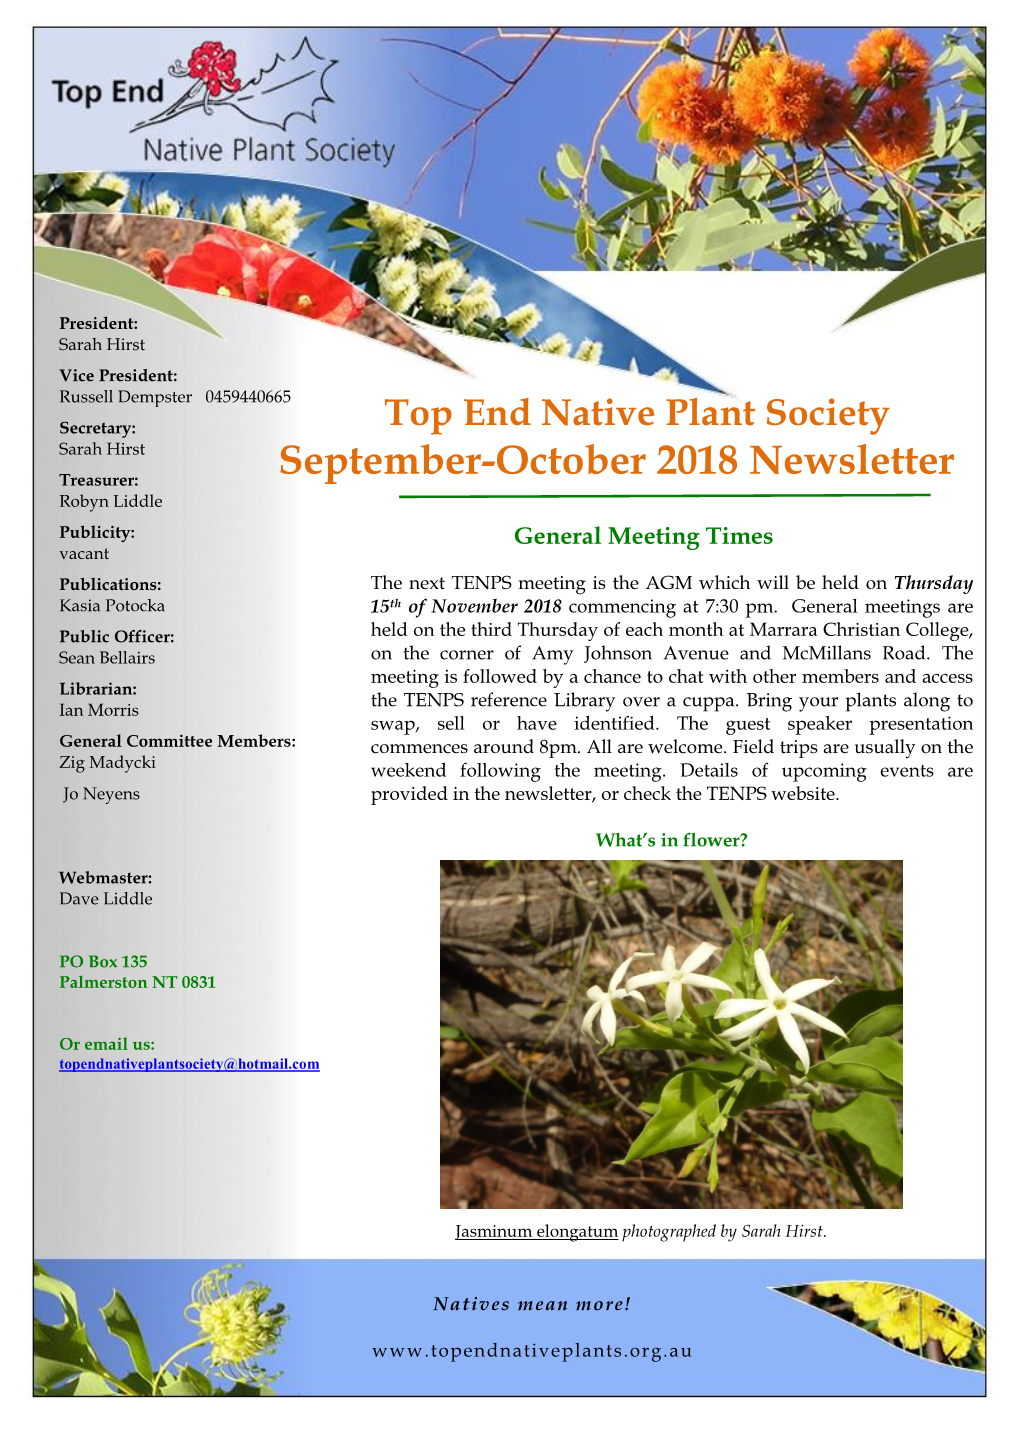 Top End Native Plant Society September-October 2018 Newsletter